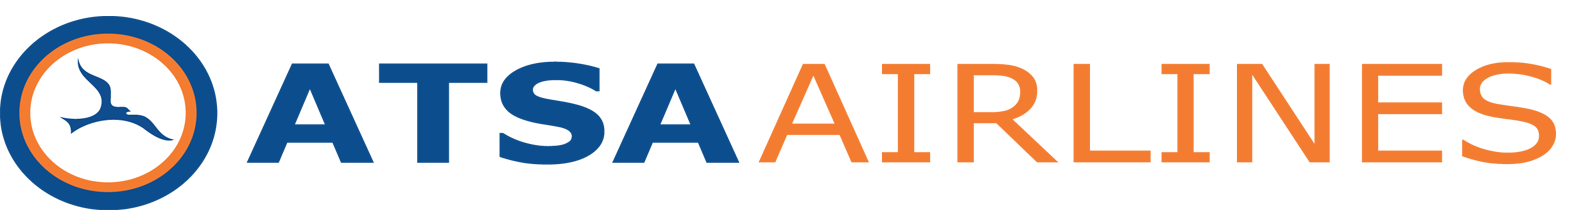 Logo Atsa